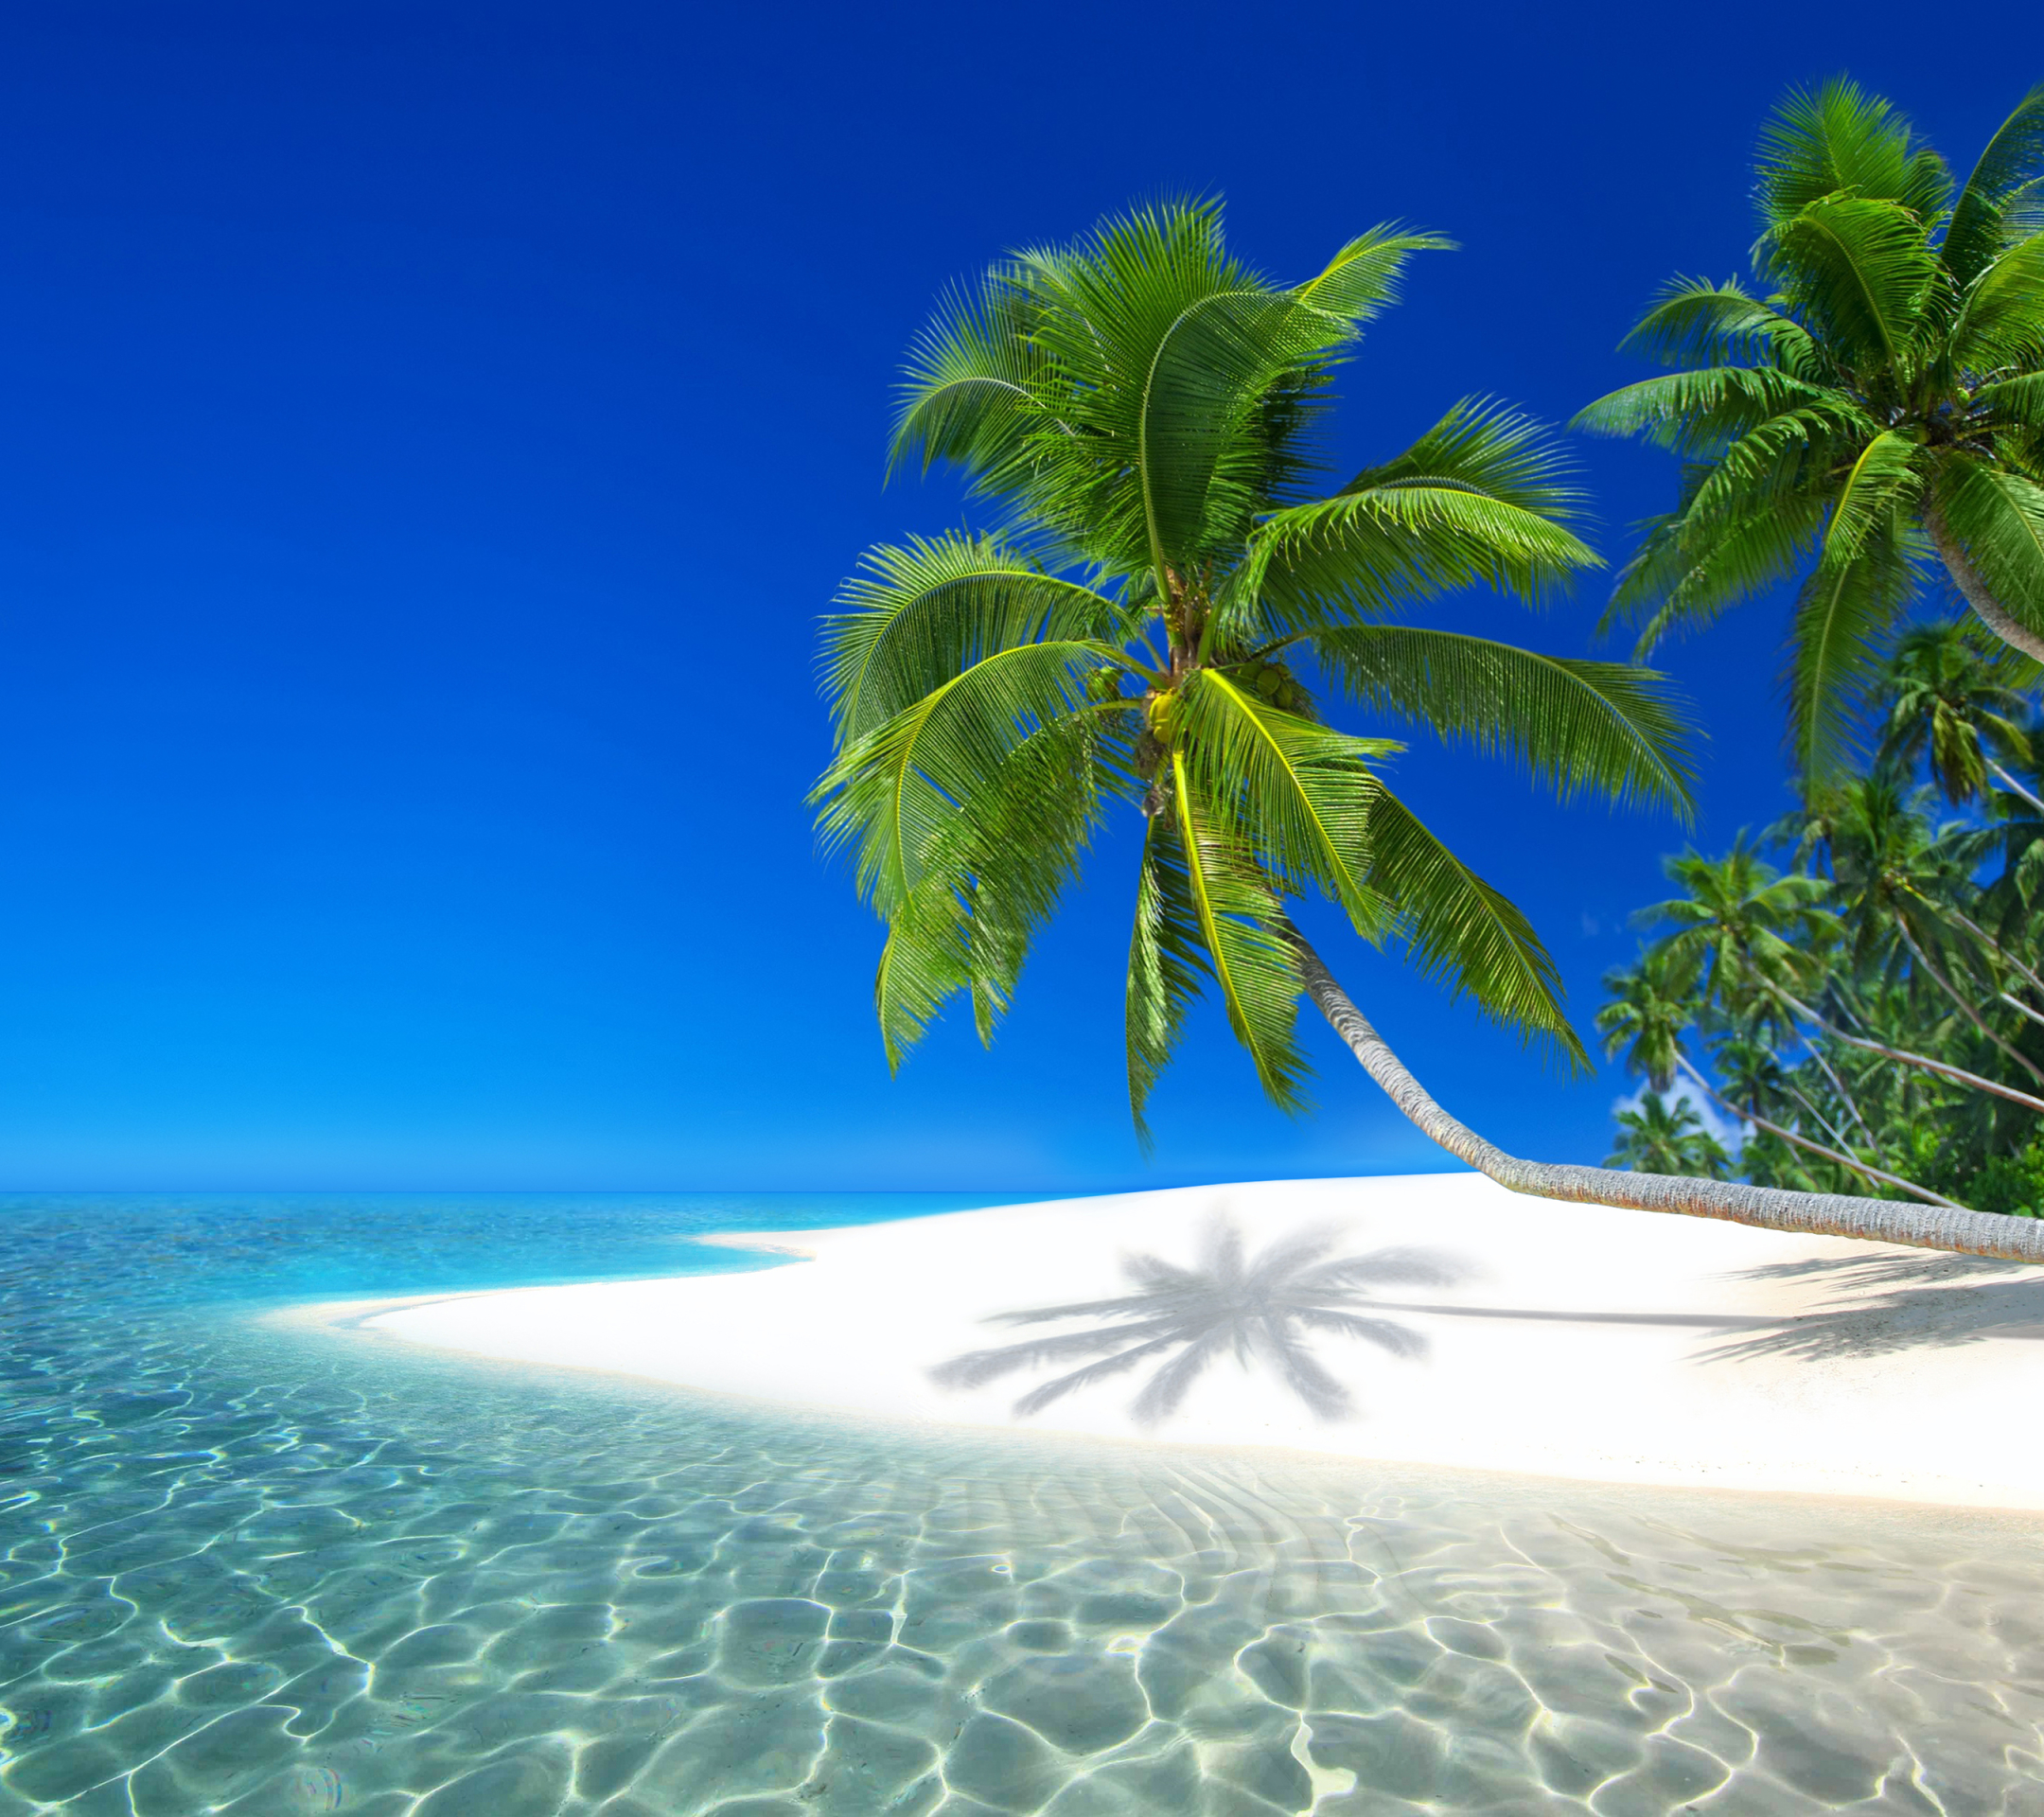 Hd desktop sea beach earth island tropical seychelles palm tree download free picture